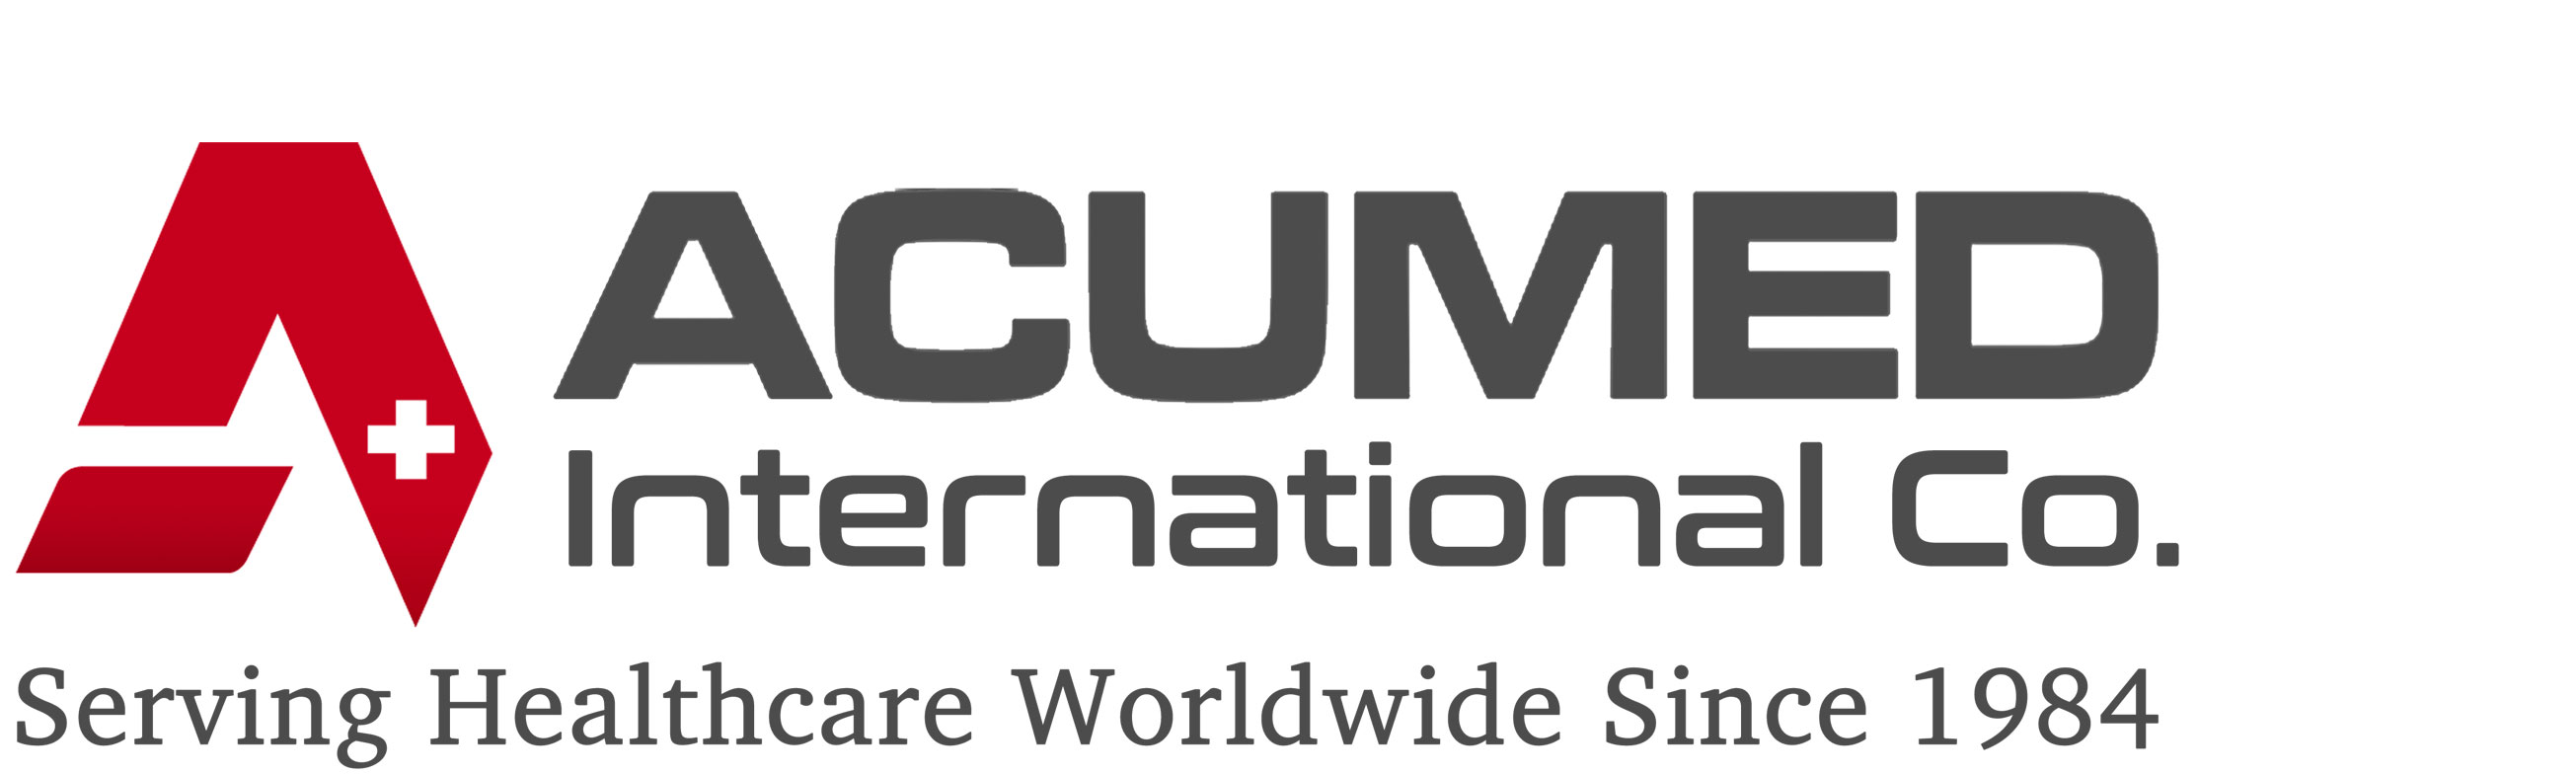 Acumed International Co.